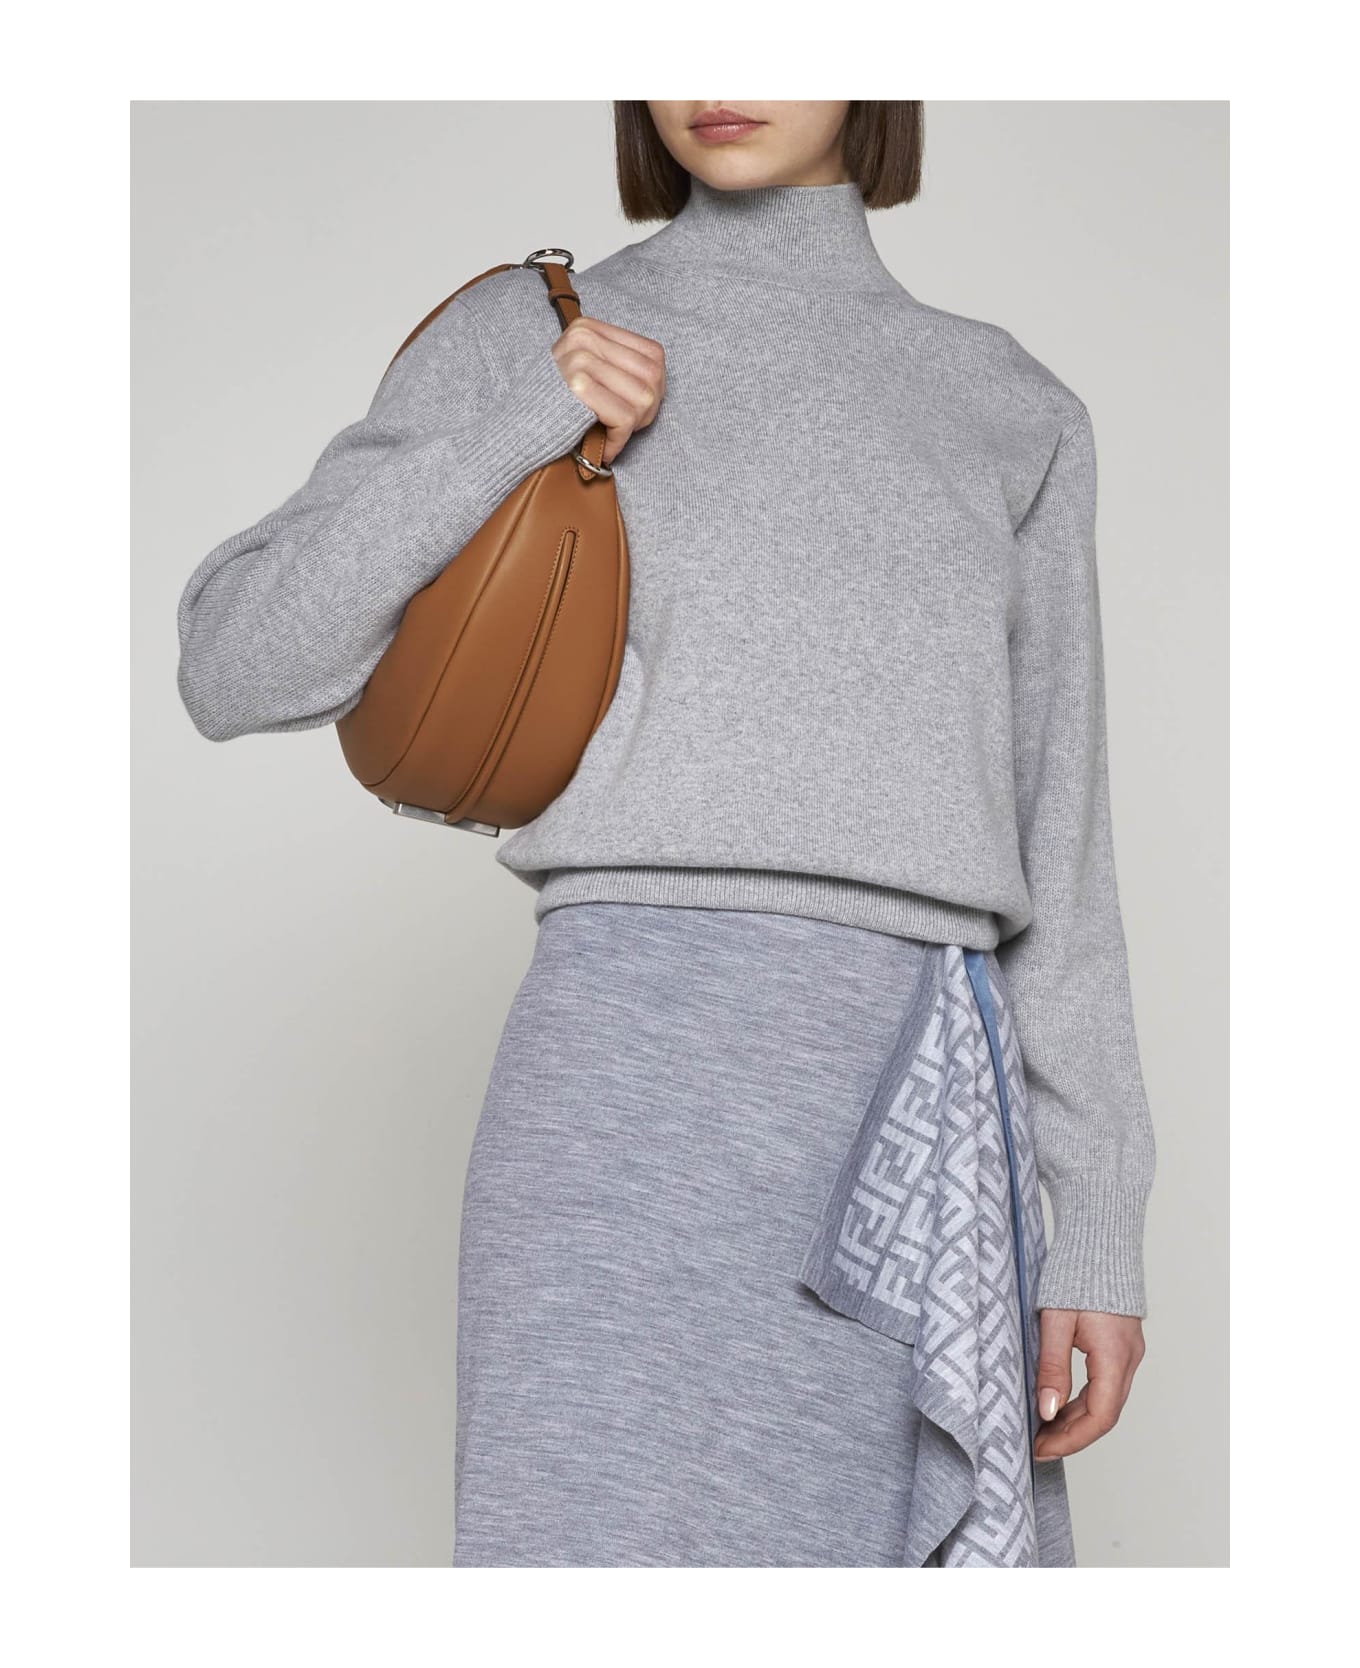 Fendi Wool And Cashmere Sweater - Grey